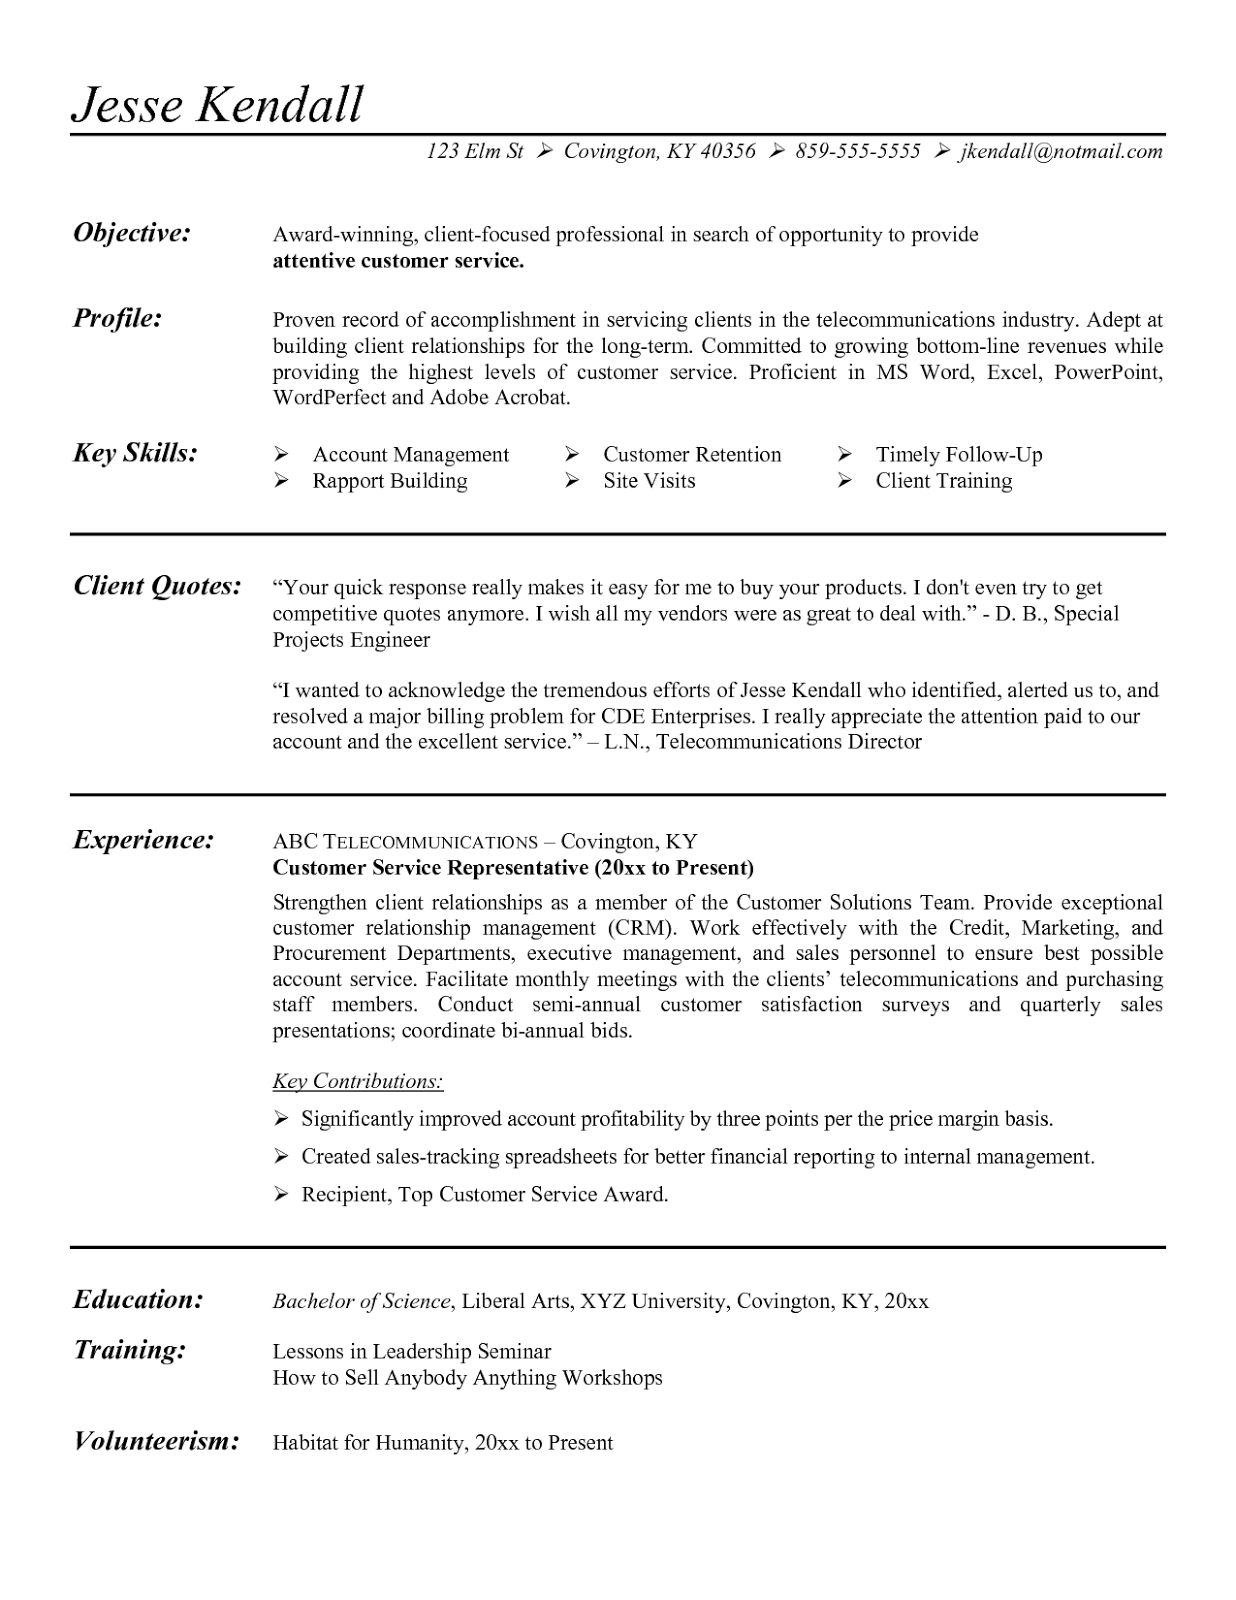 Marketing representative resume